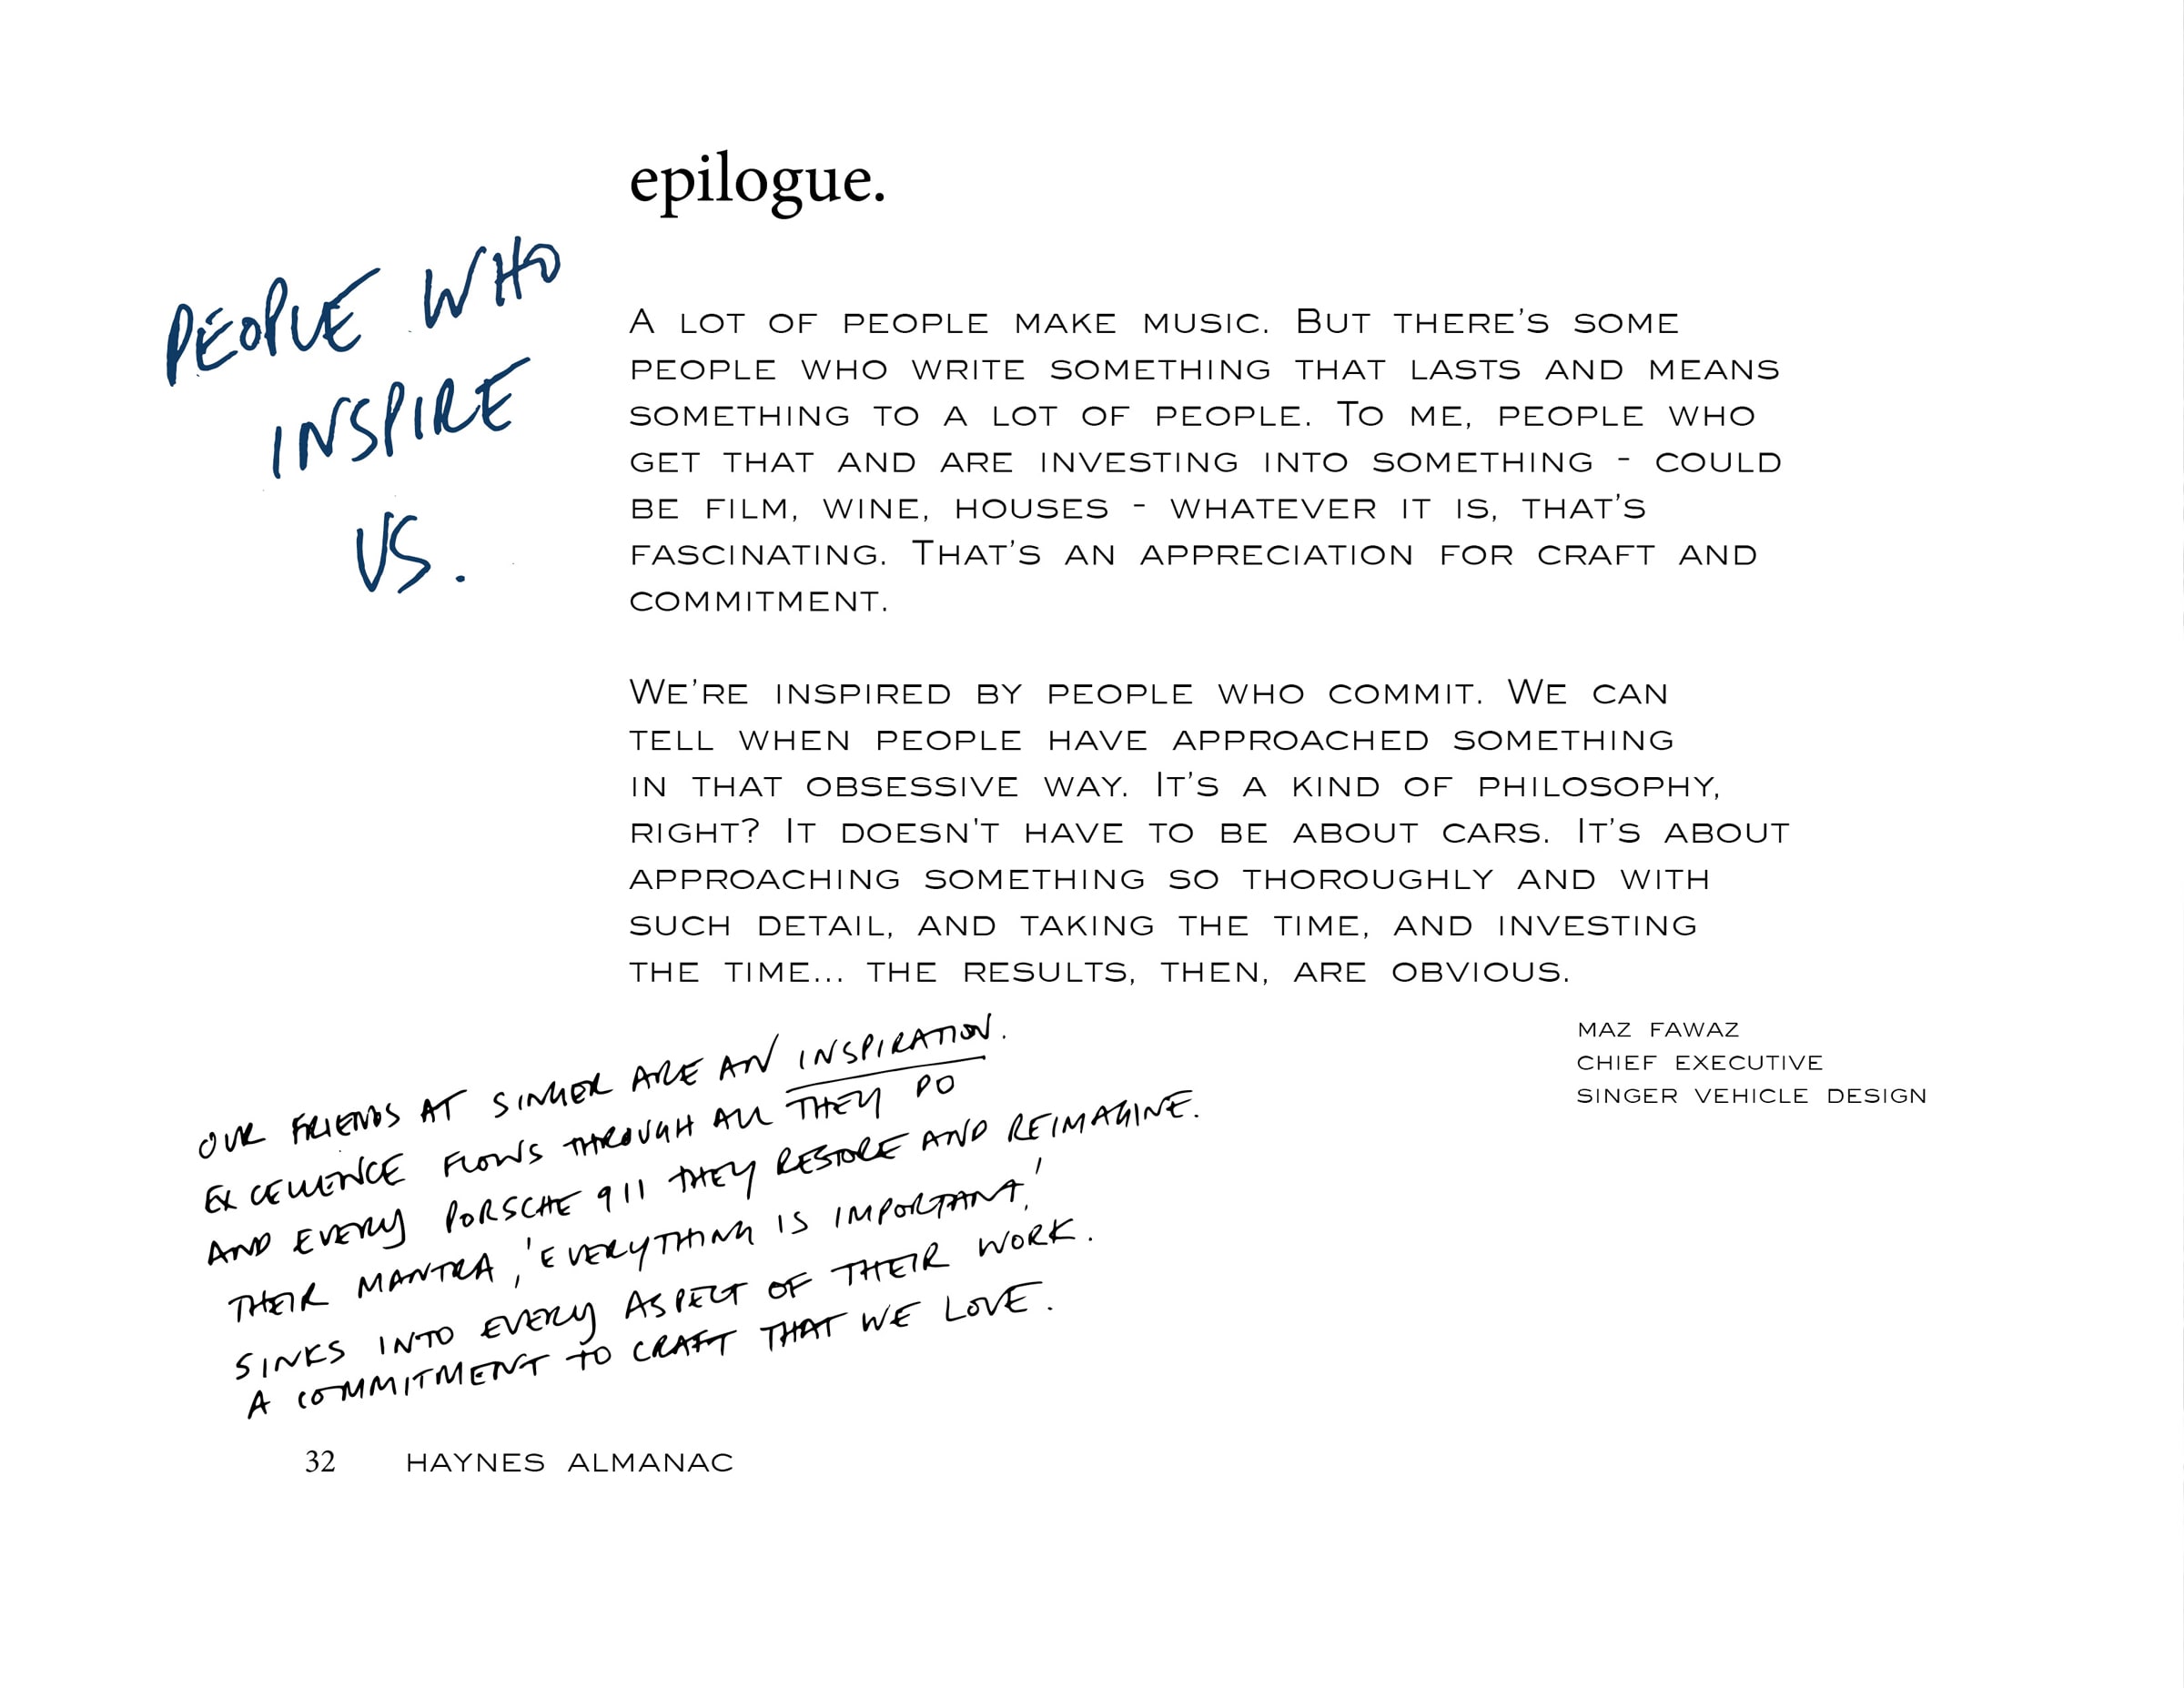 Almanac: epilogue content - people who inspire us